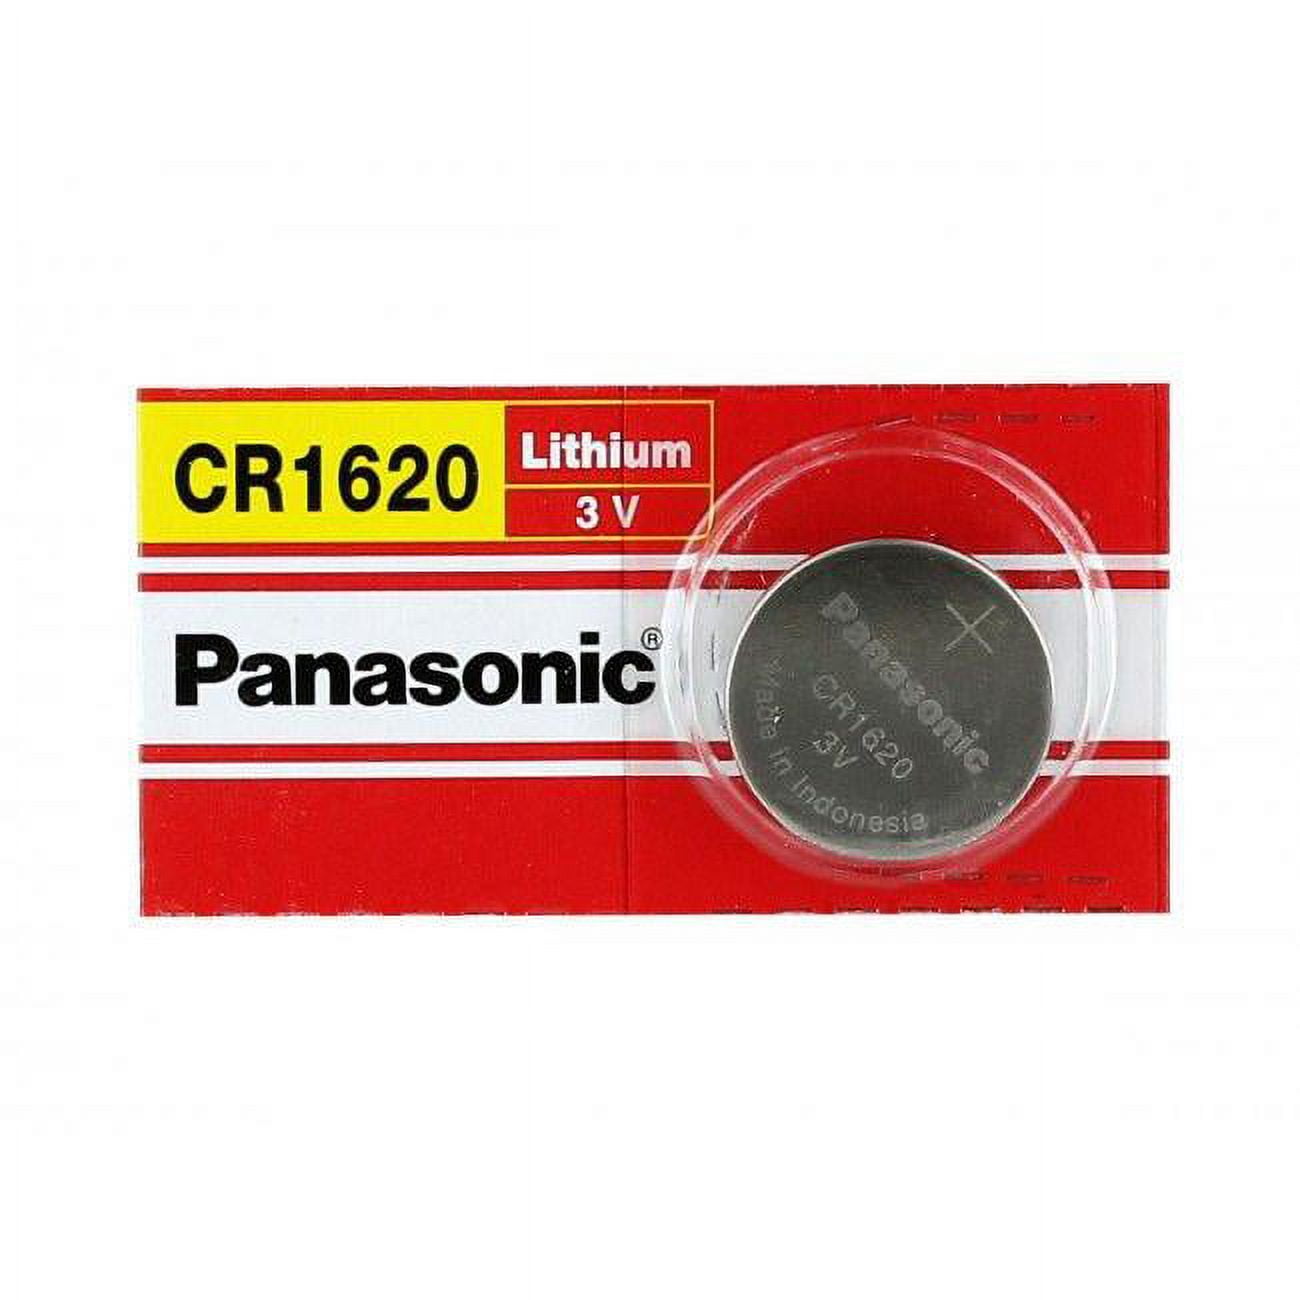 CR1620 Panasonic Battery